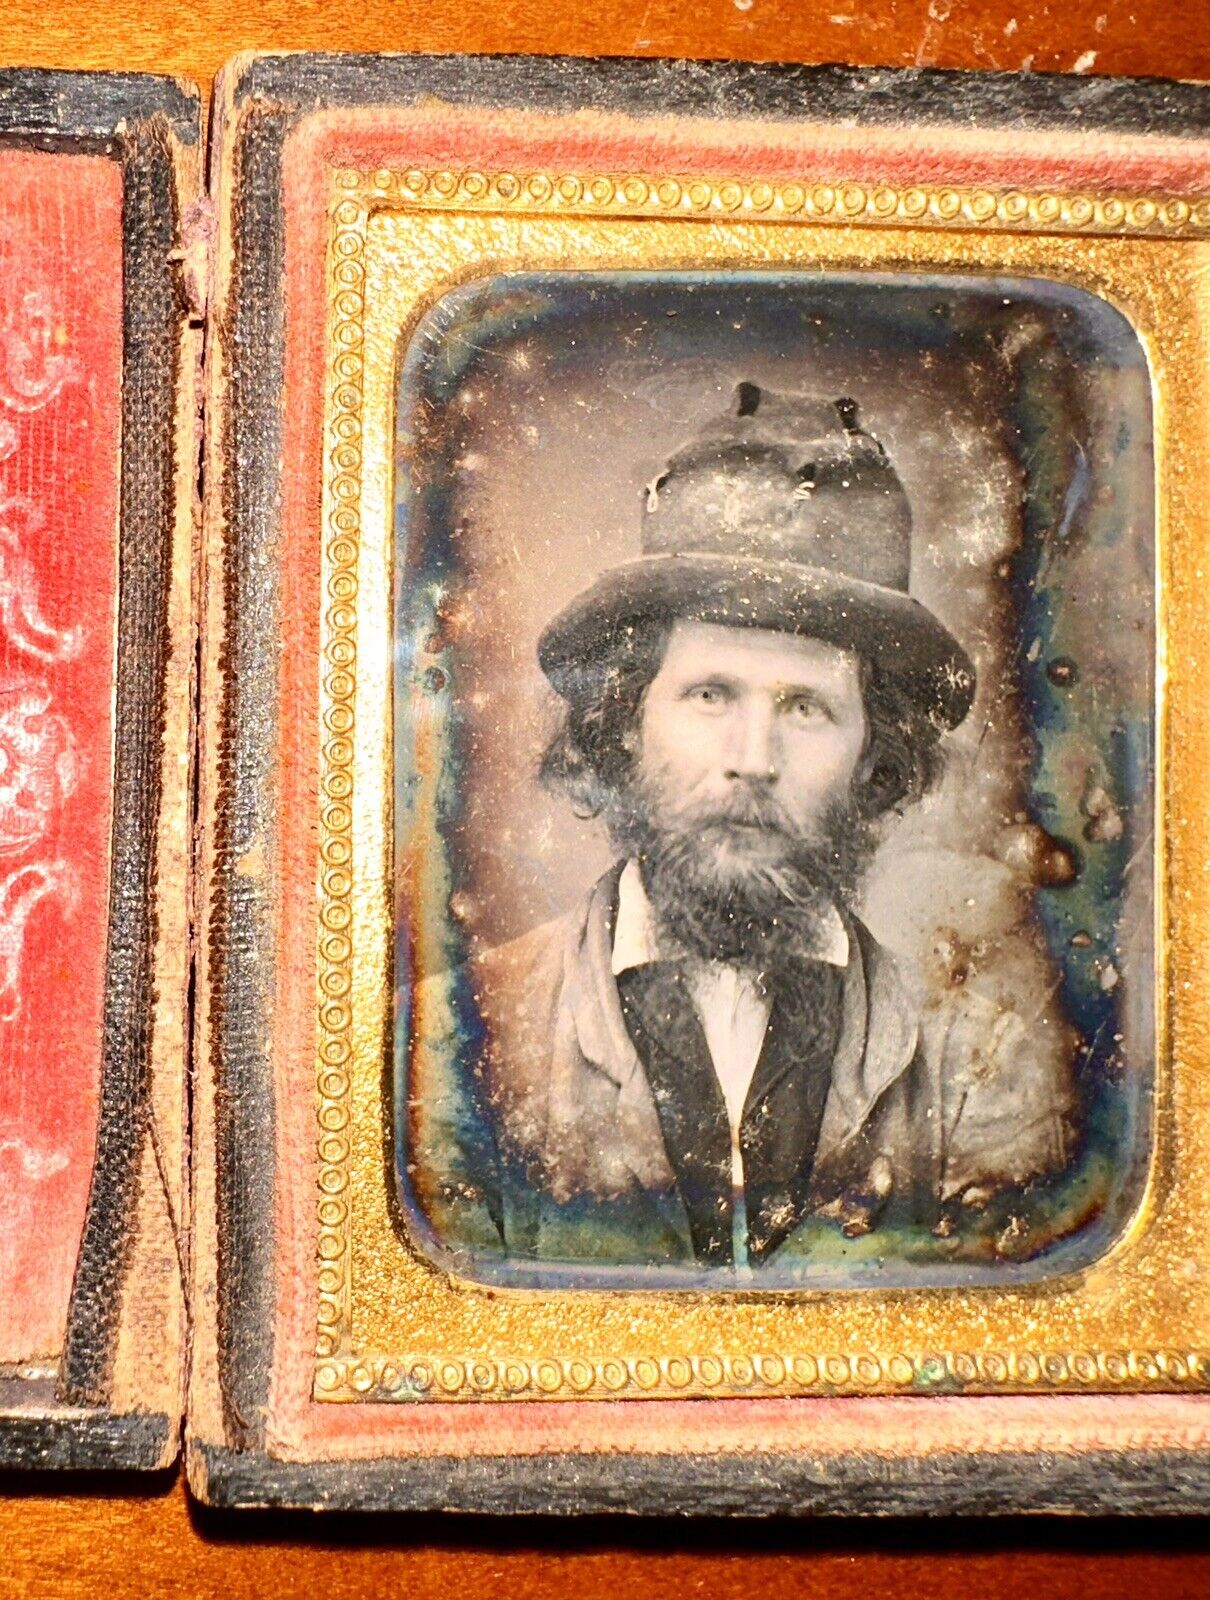 Unusual Daguerreotype Bearded Man Wearing Worn Patched Hat 1850s